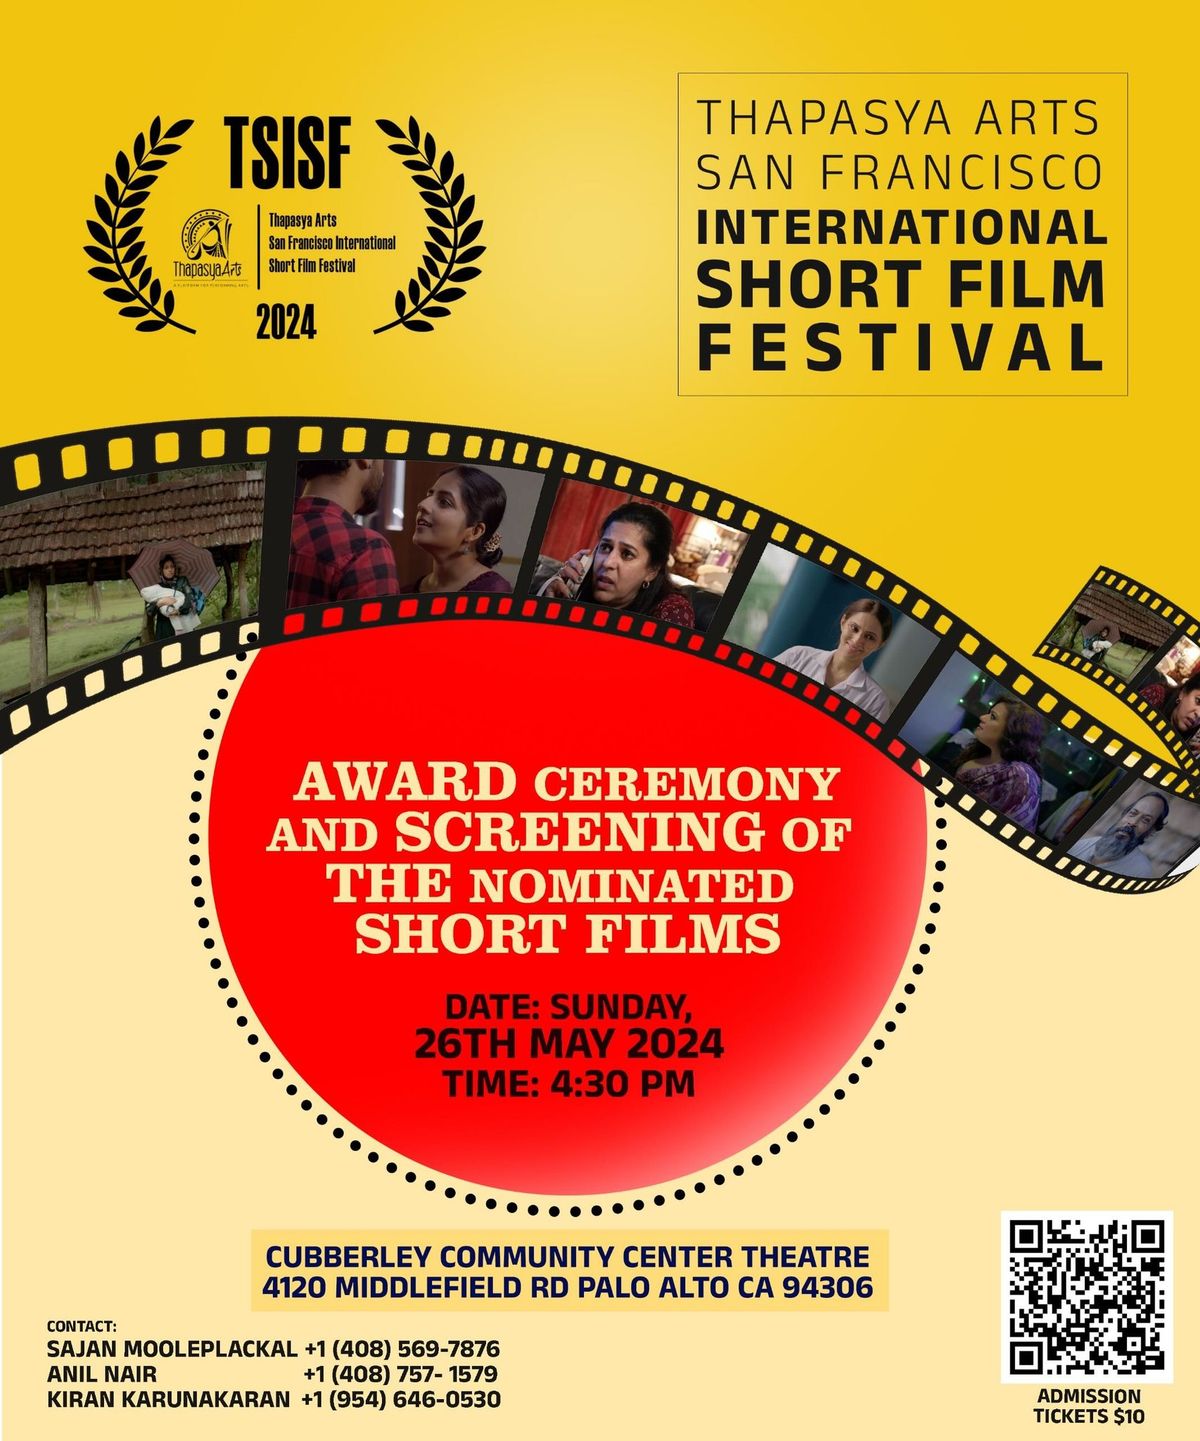 Thapasya Arts San Francisco International Short Film Festival